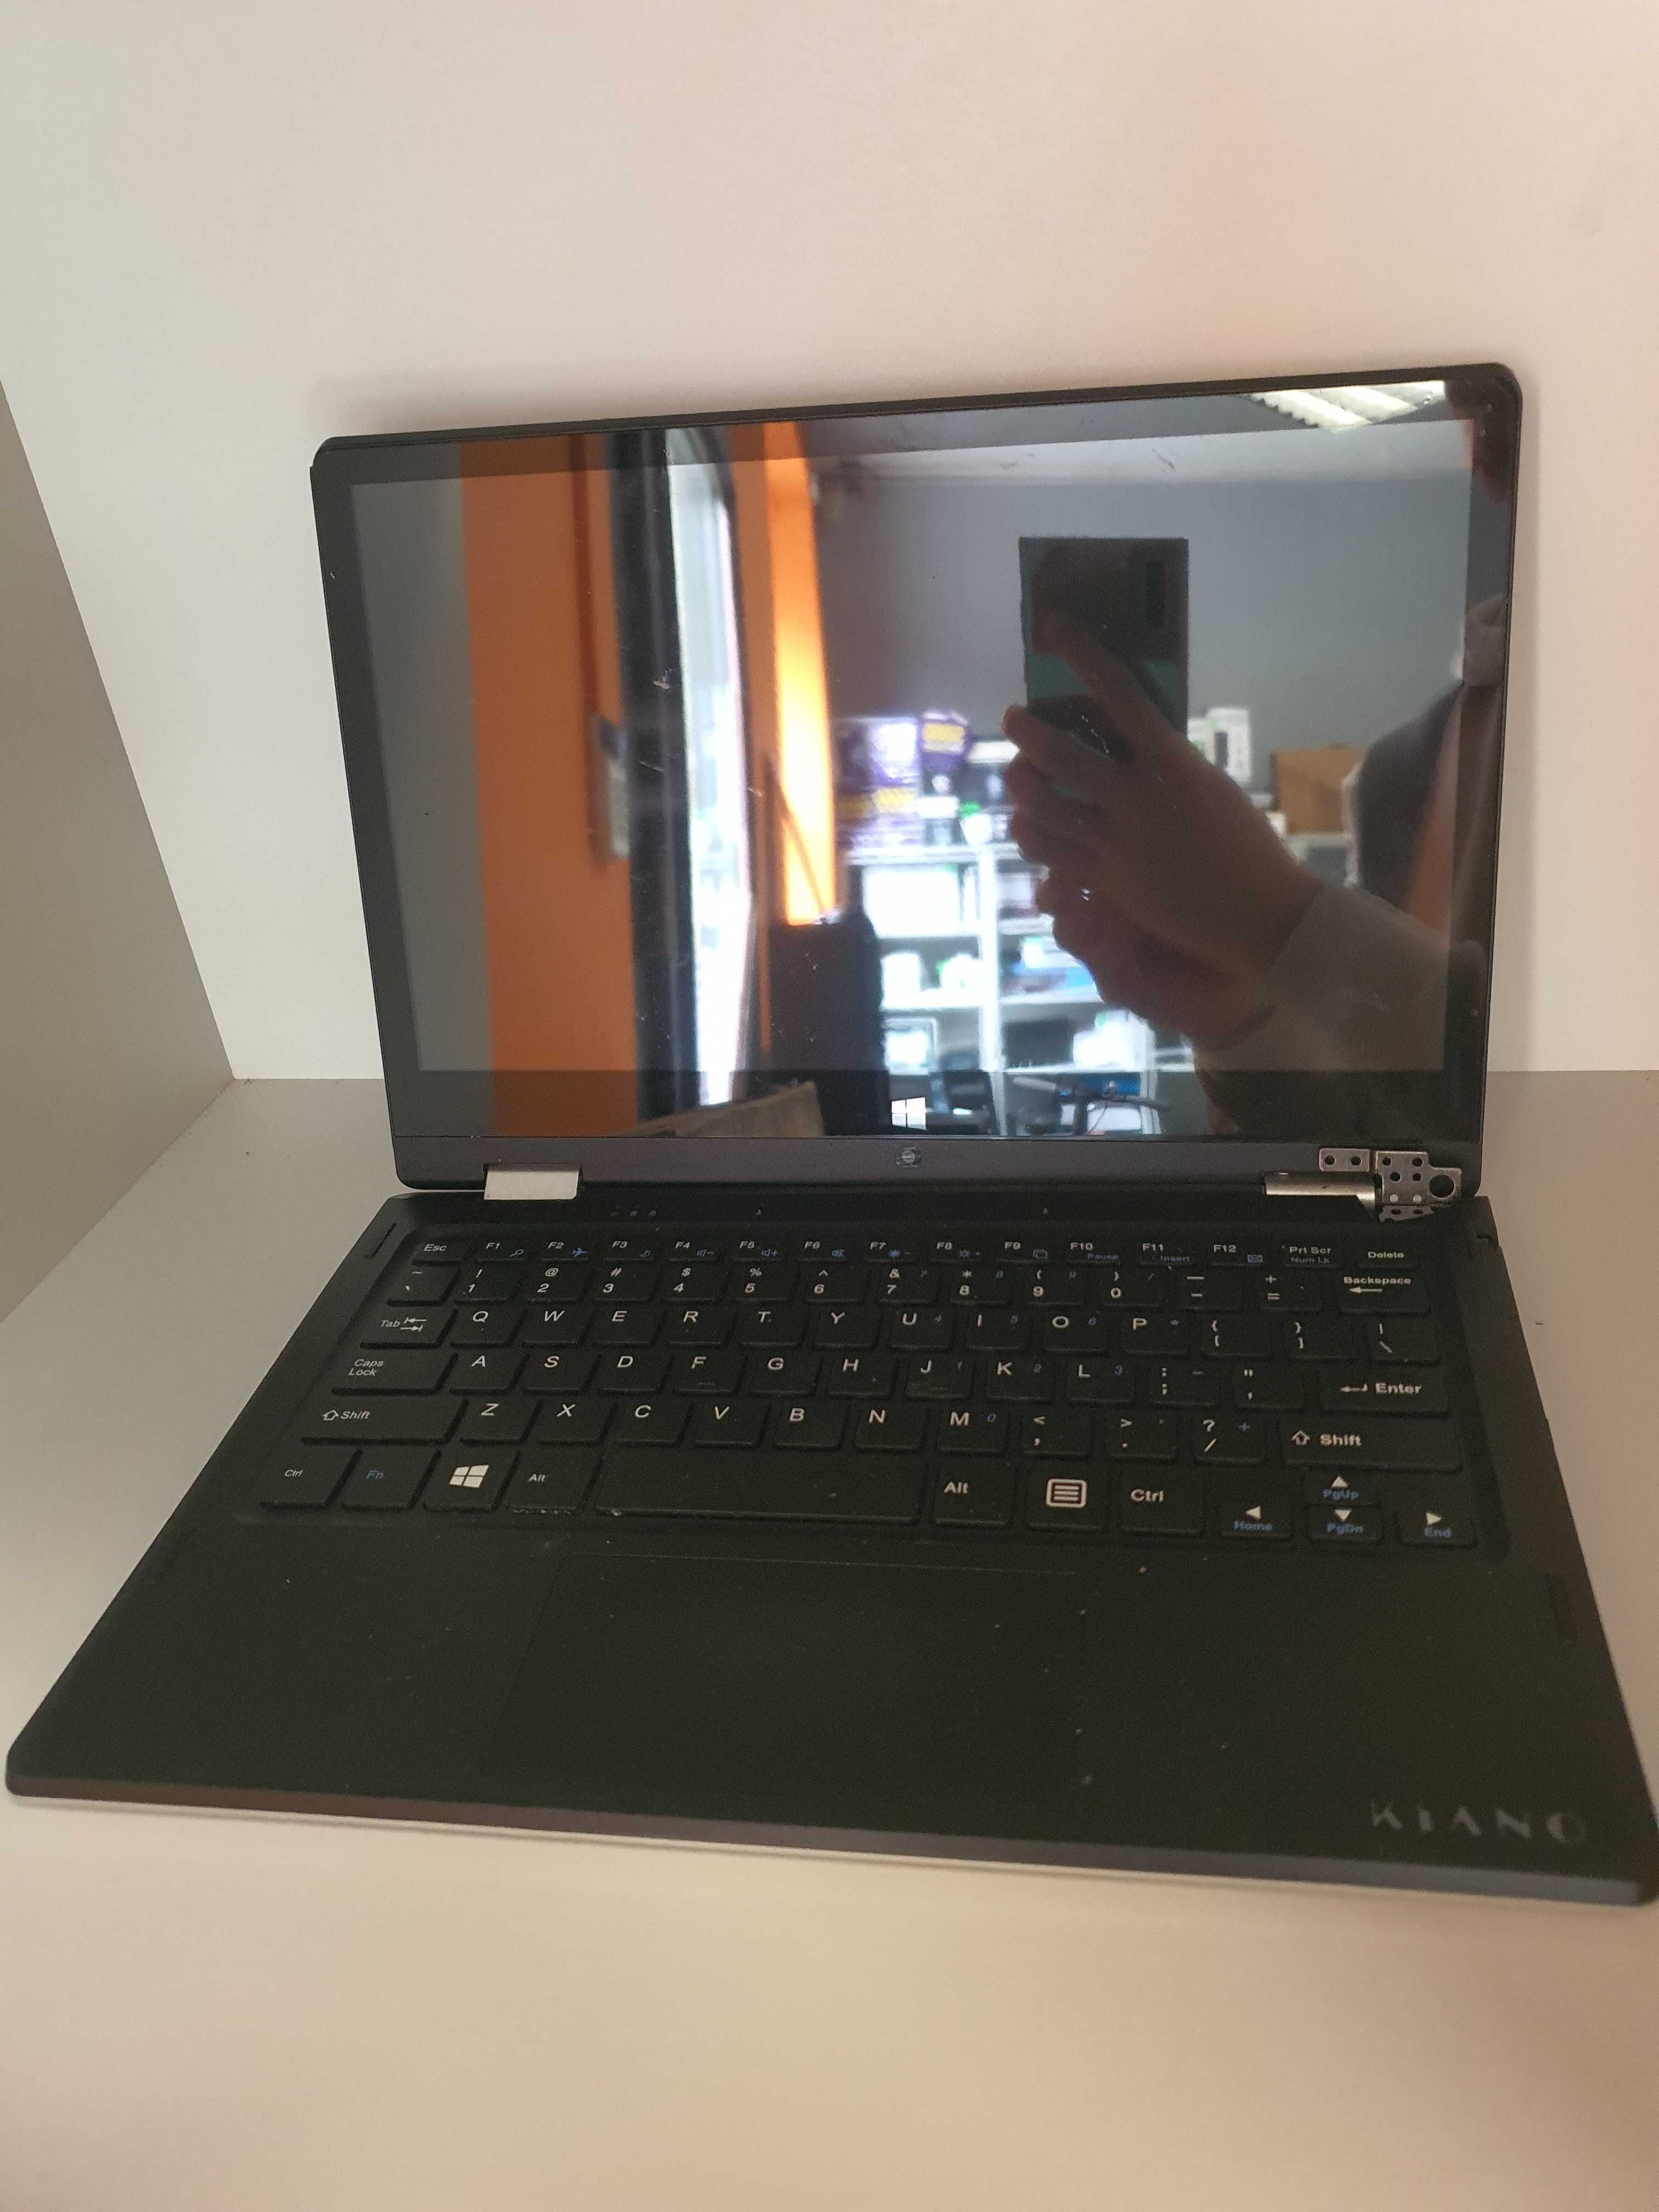 Laptop Kiano Elegance 11.6 360